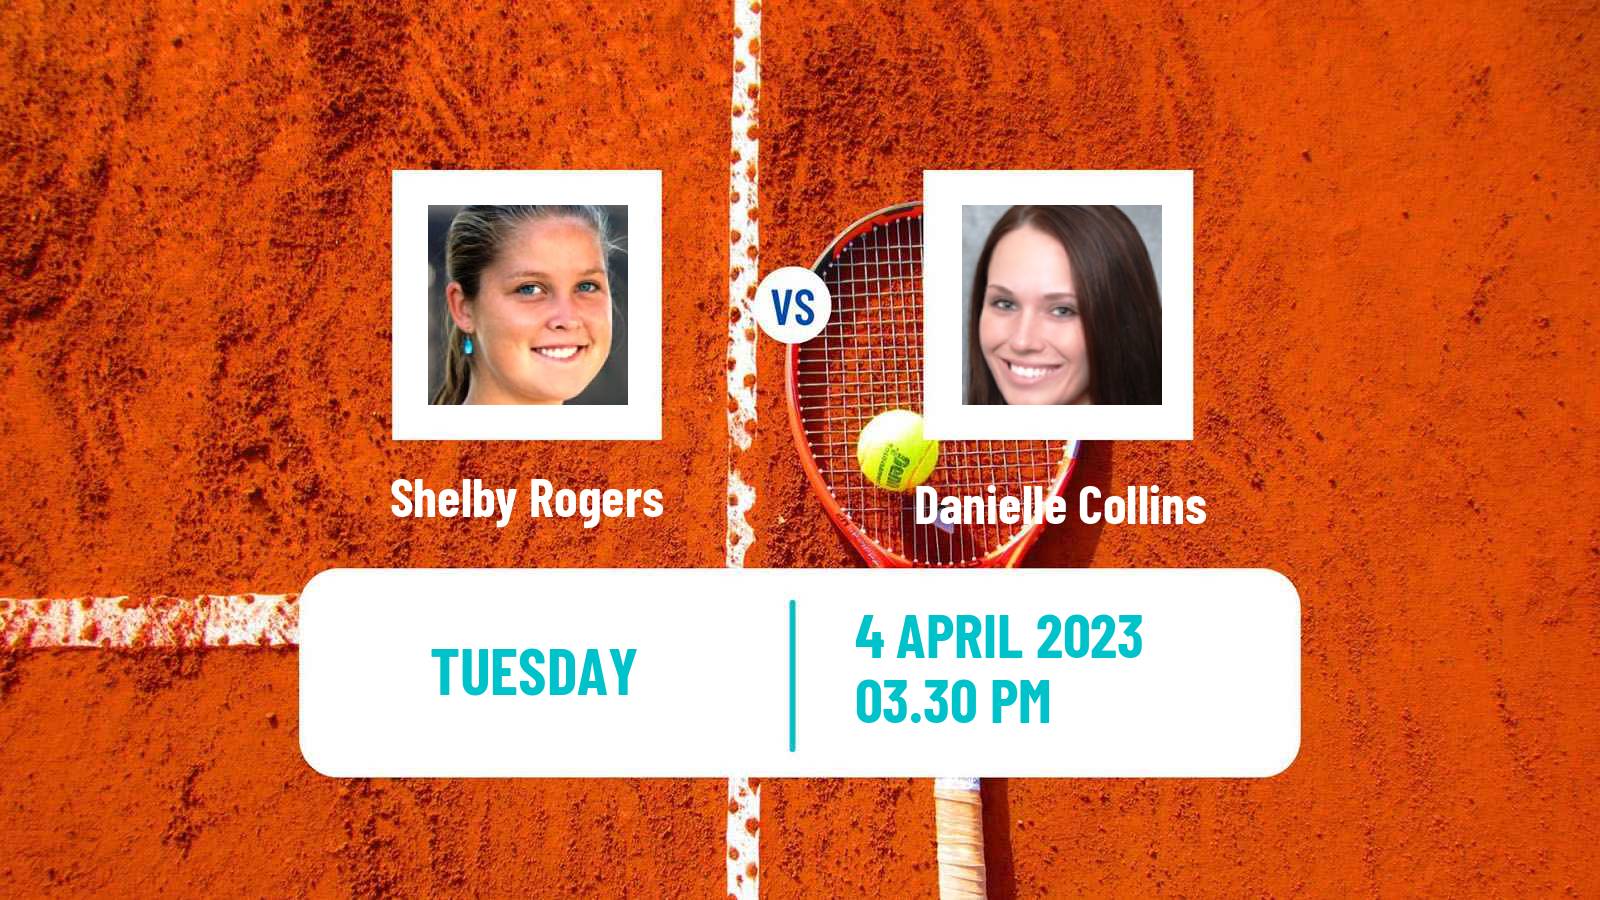 Tennis WTA Charleston Shelby Rogers - Danielle Collins